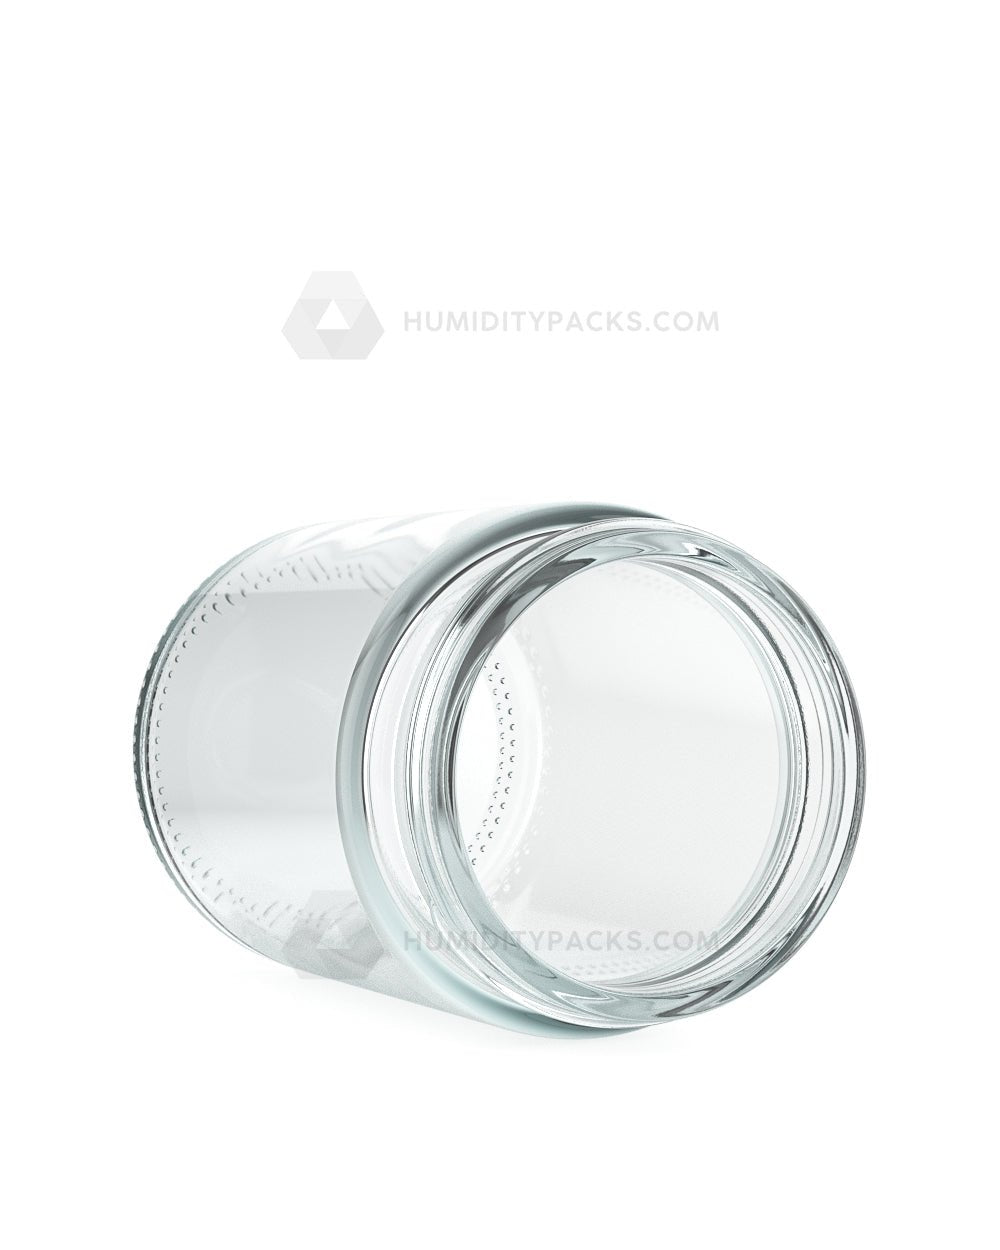 50mm Straight Sided Clear 5oz Glass Jar 100/Box Humidity Packs - 3